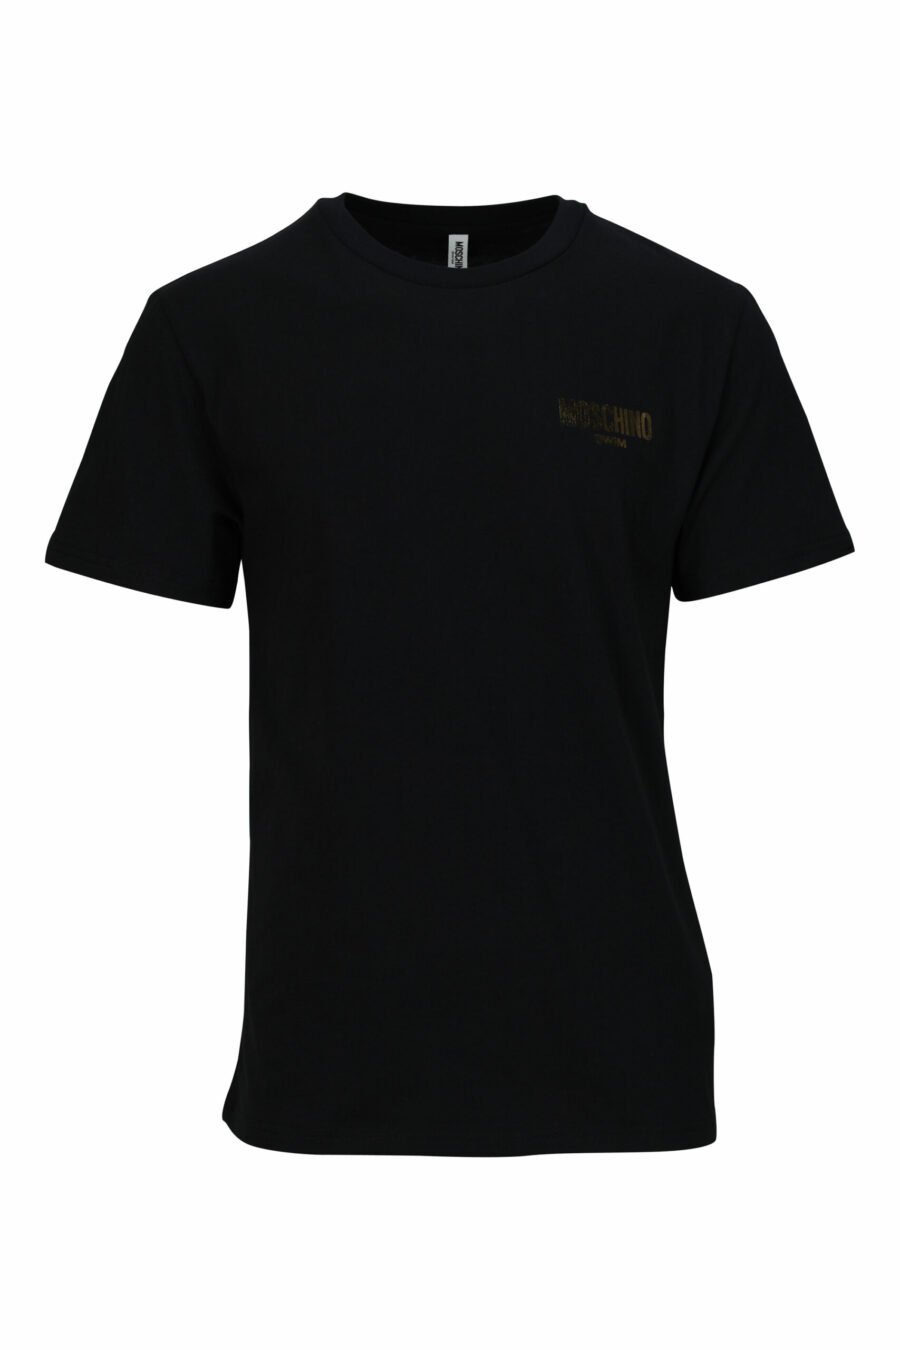 Camiseta negra con minilogo dorado "swim" - 667113673073 scaled